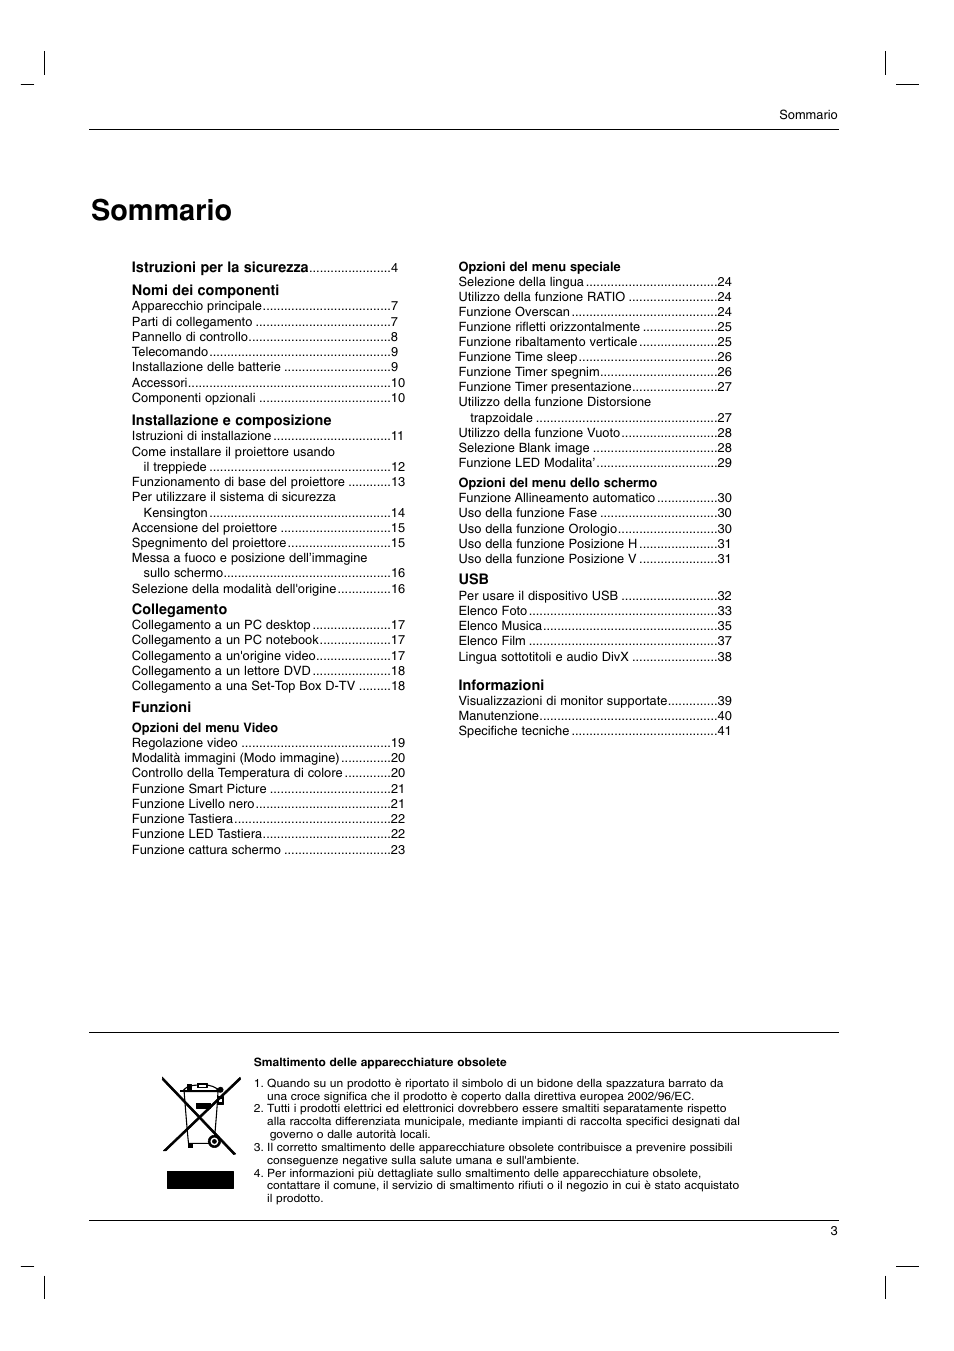 LG HS102 Manuale d'uso | Pagina 3 / 42